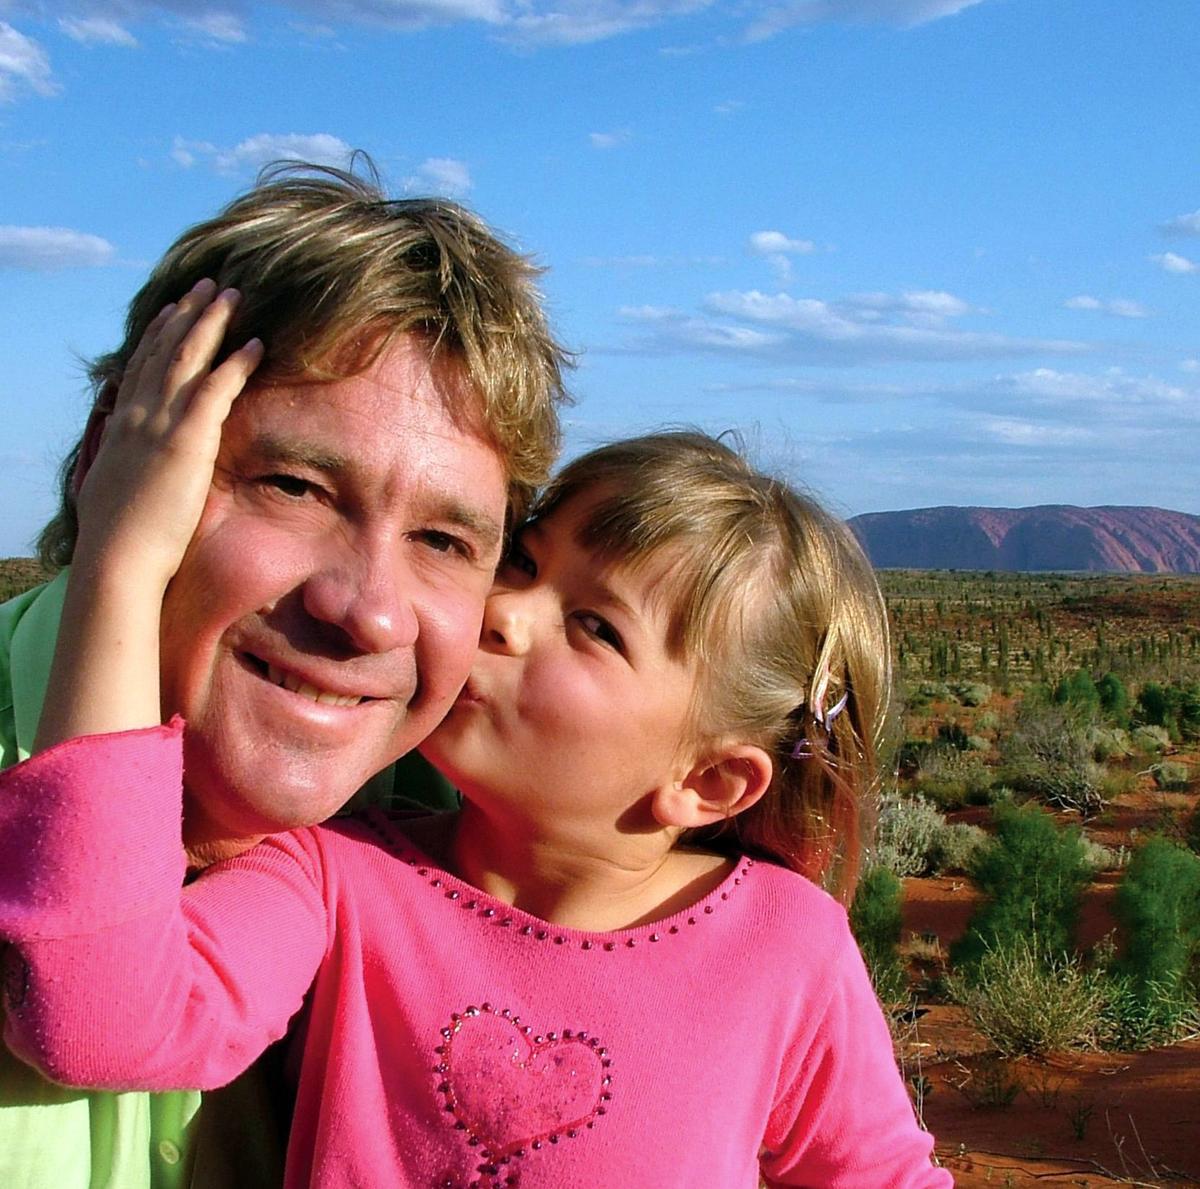 Steve Irwin poses with his daughter, Bindi Irwin, on Oct. 2, 2006, in Uluru, Australia. (Australia Zoo via Getty Images)